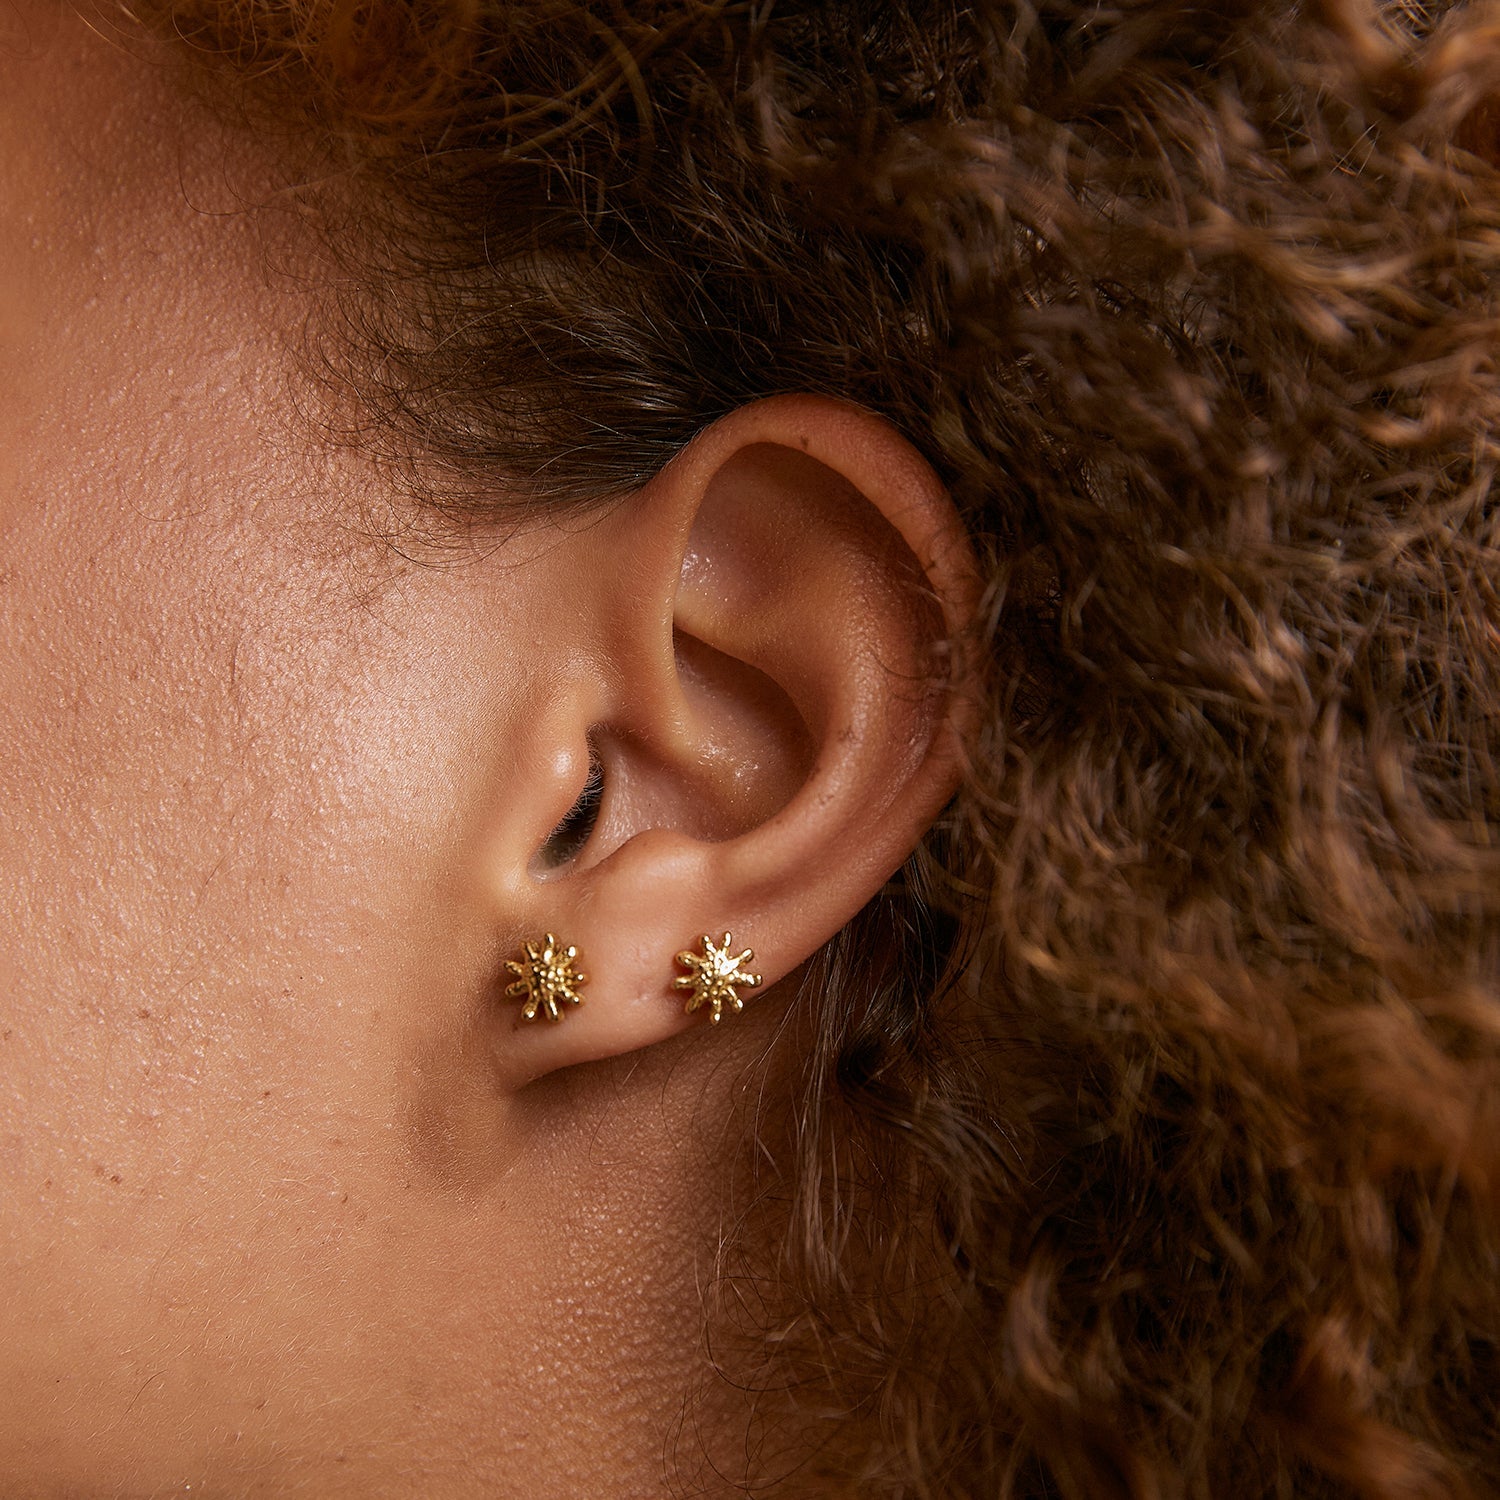 Magnolia Stud Earrings - Gold